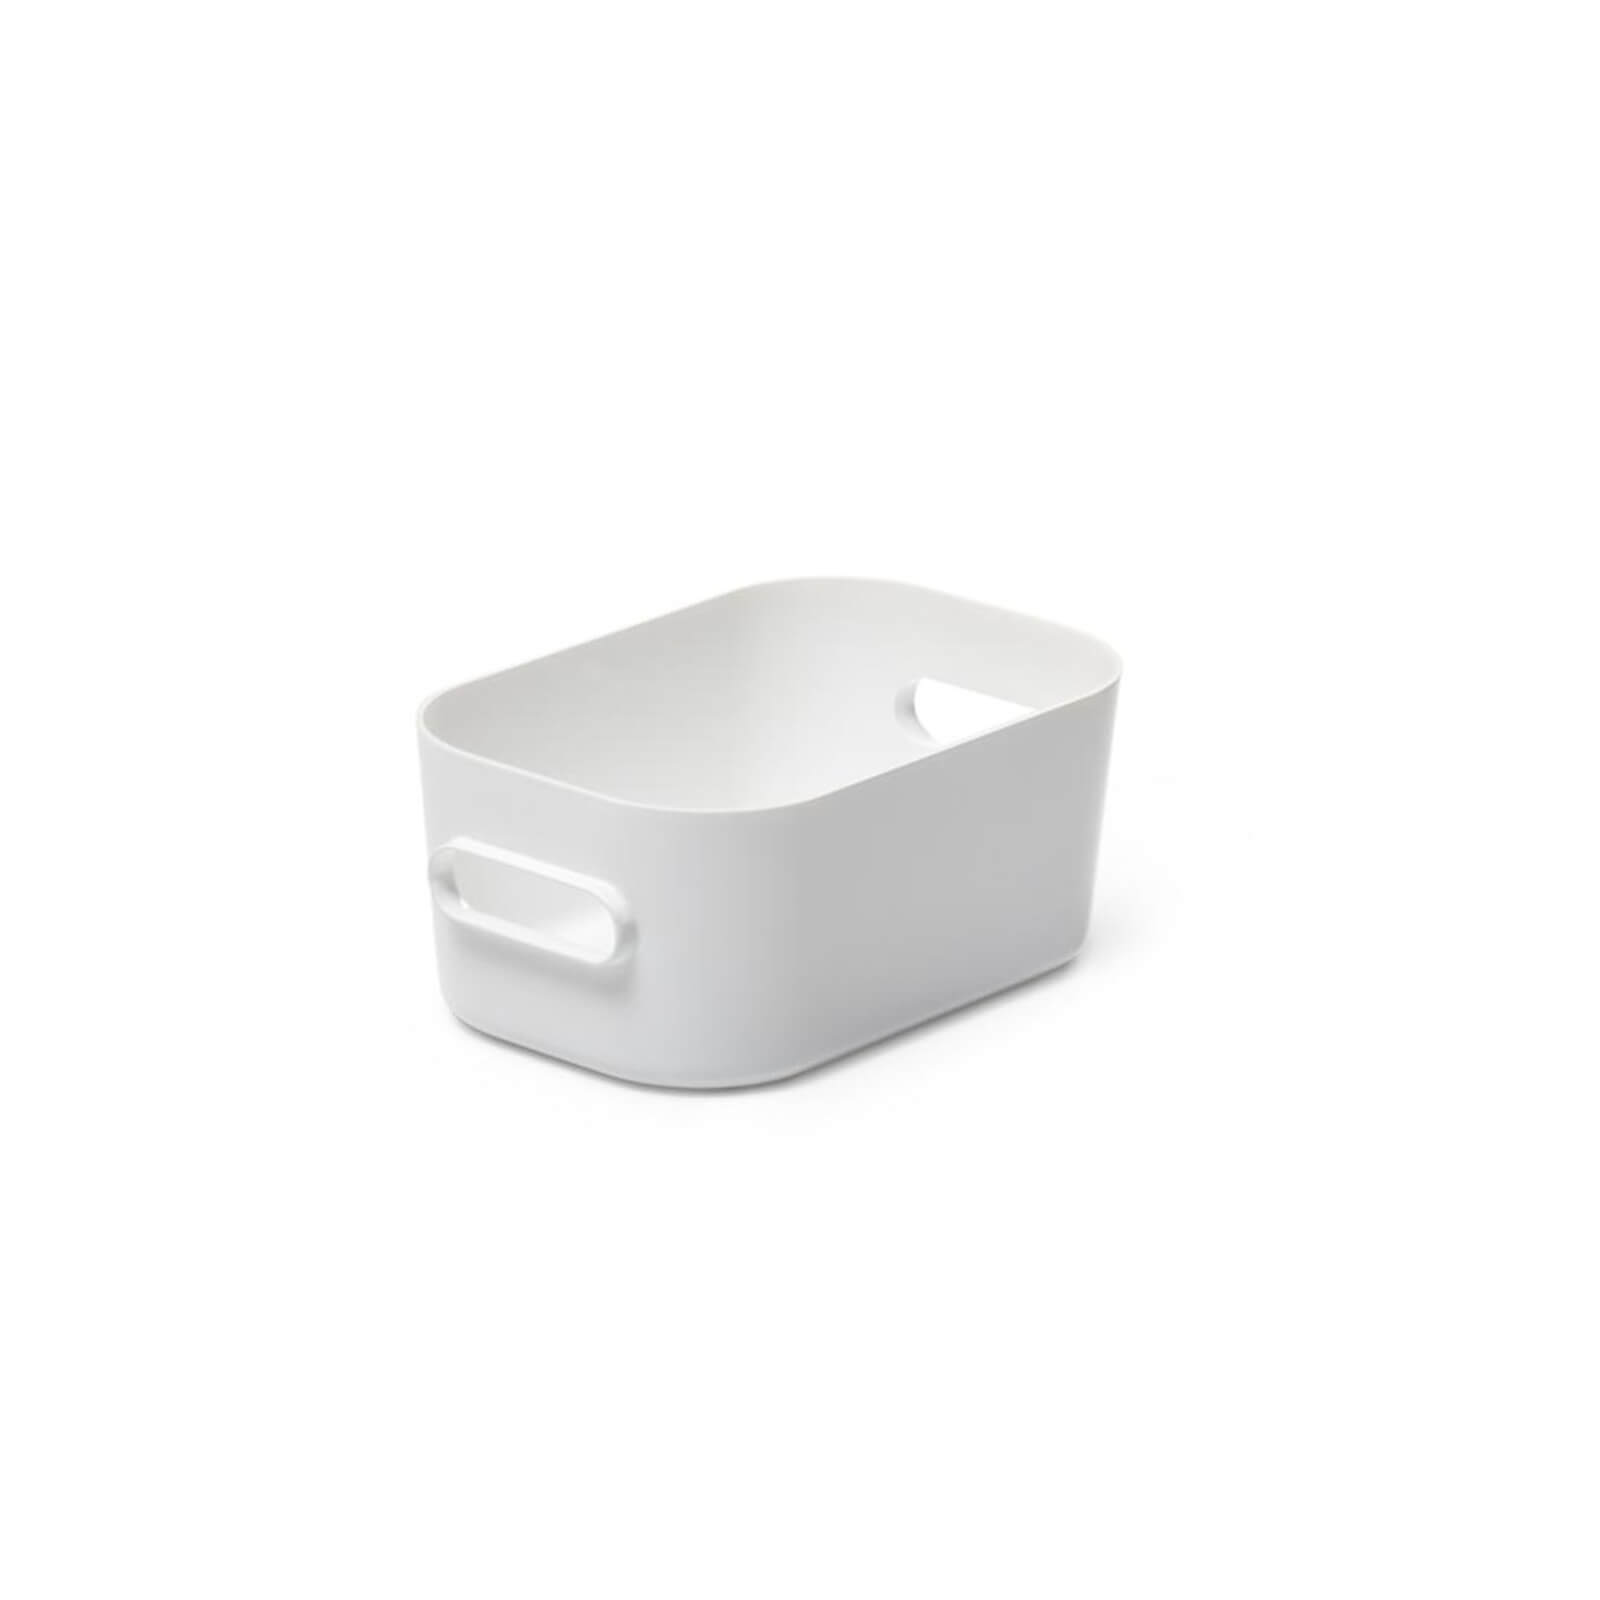 Photo of Smartstore Compact Extra Small Box - White